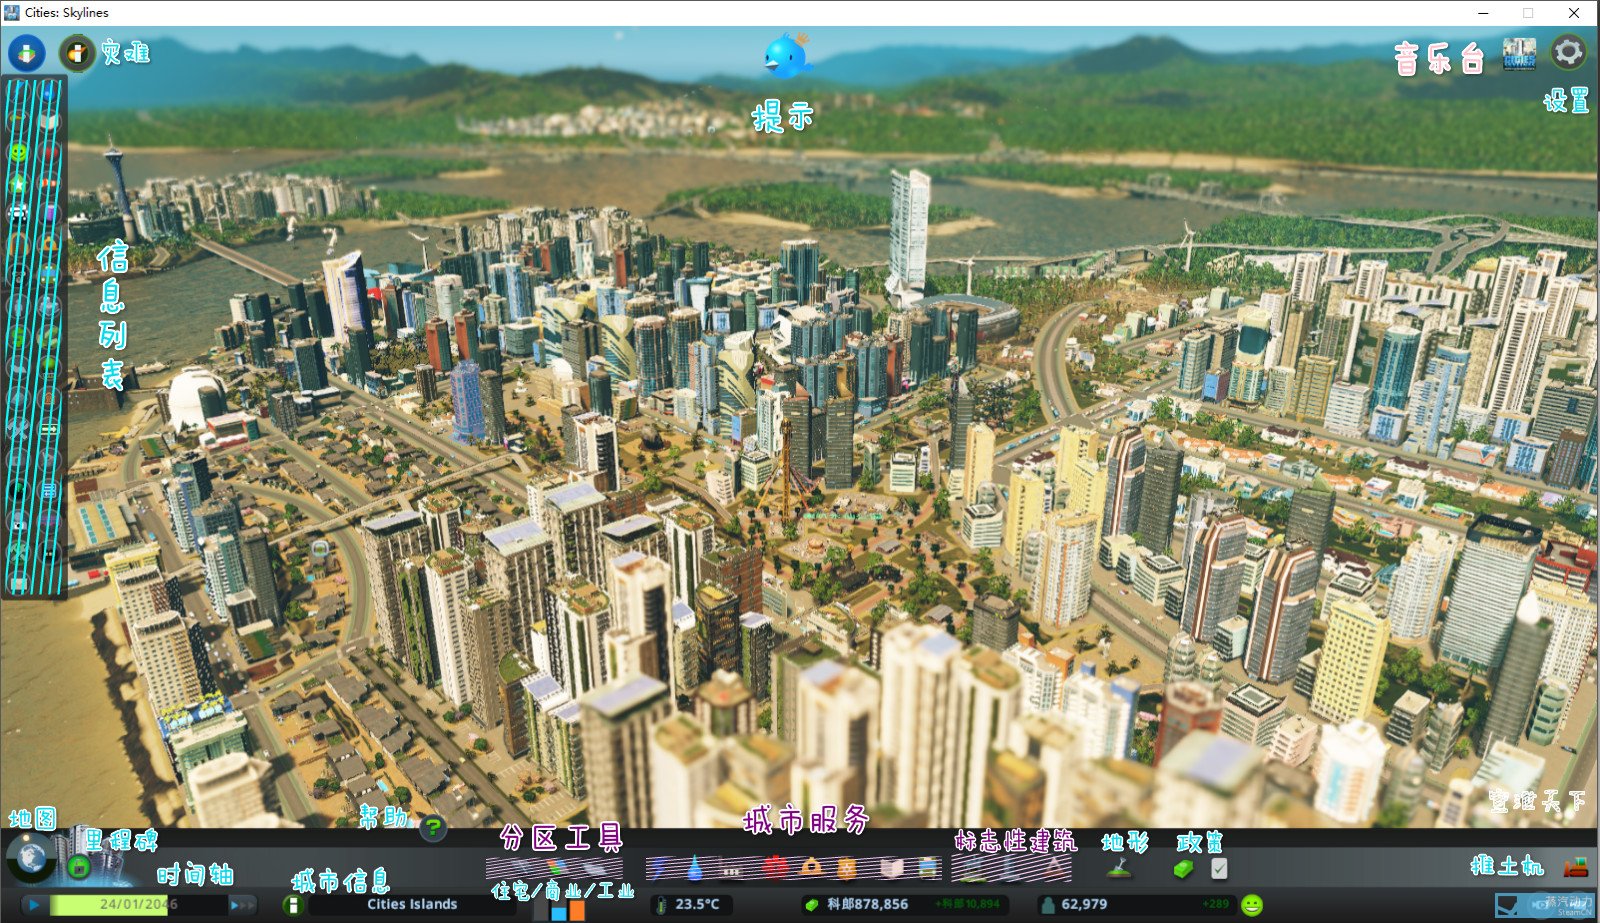 Cities Skylines 都市 天际线 资料合集 成就指南 其乐keylol 驱动正版游戏的引擎